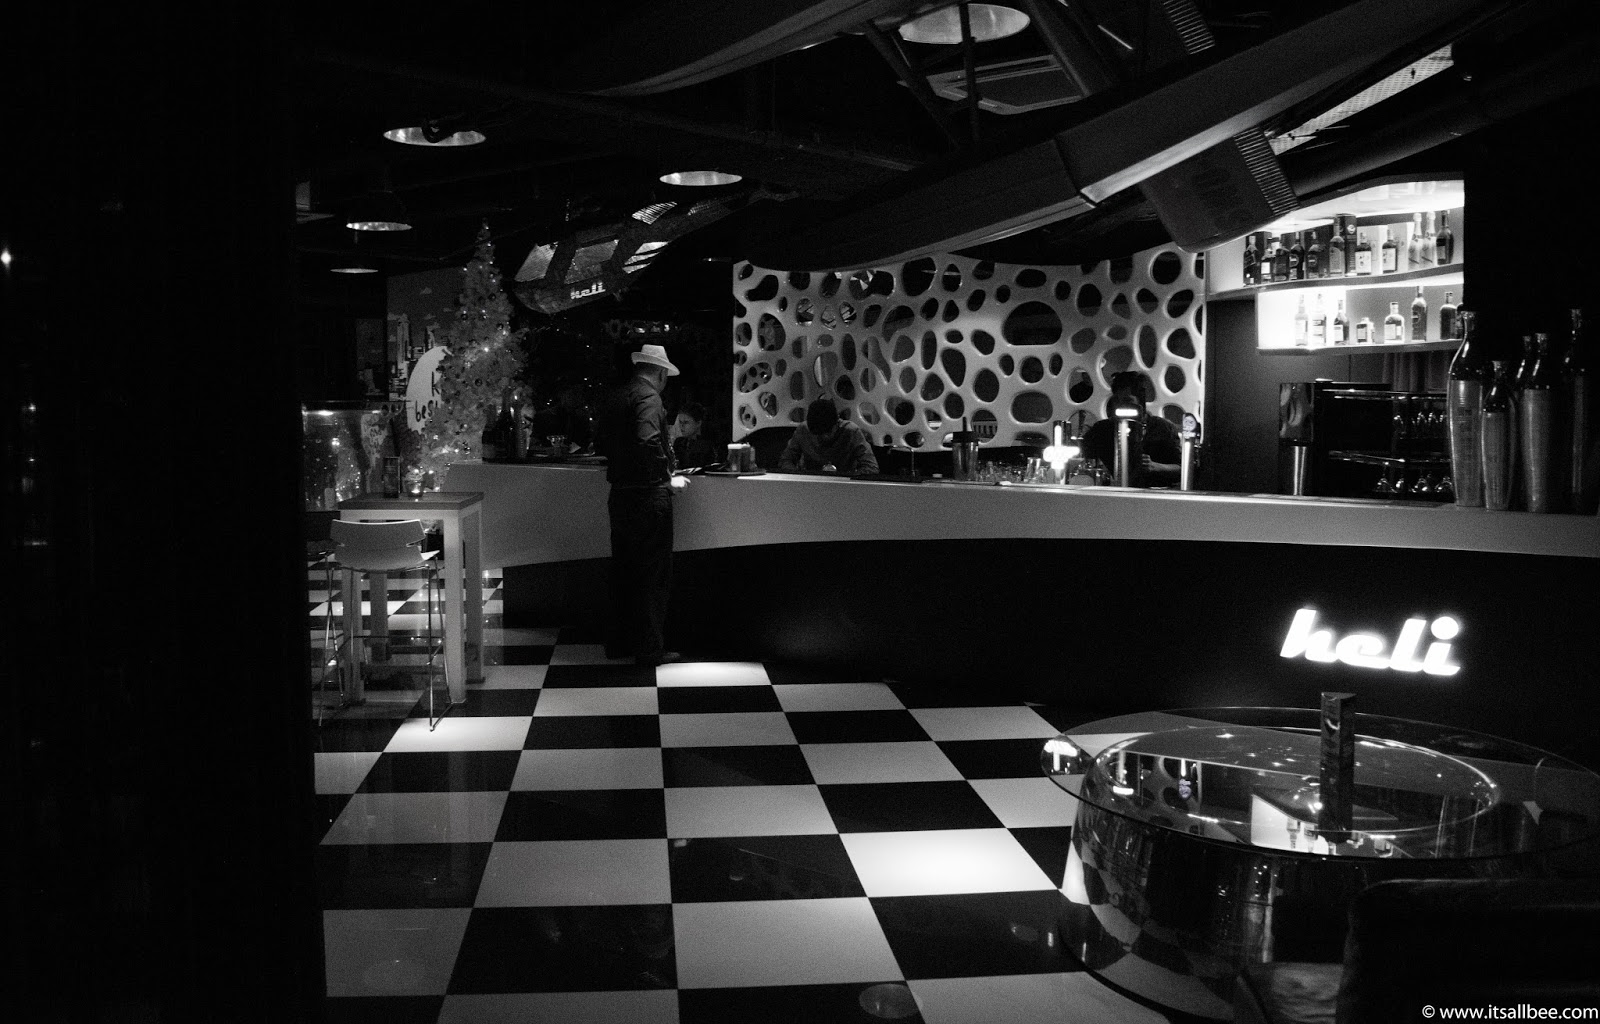 Malaysia's Best Kept Secret : Heli Lounge Bar In Kuala Lumpur